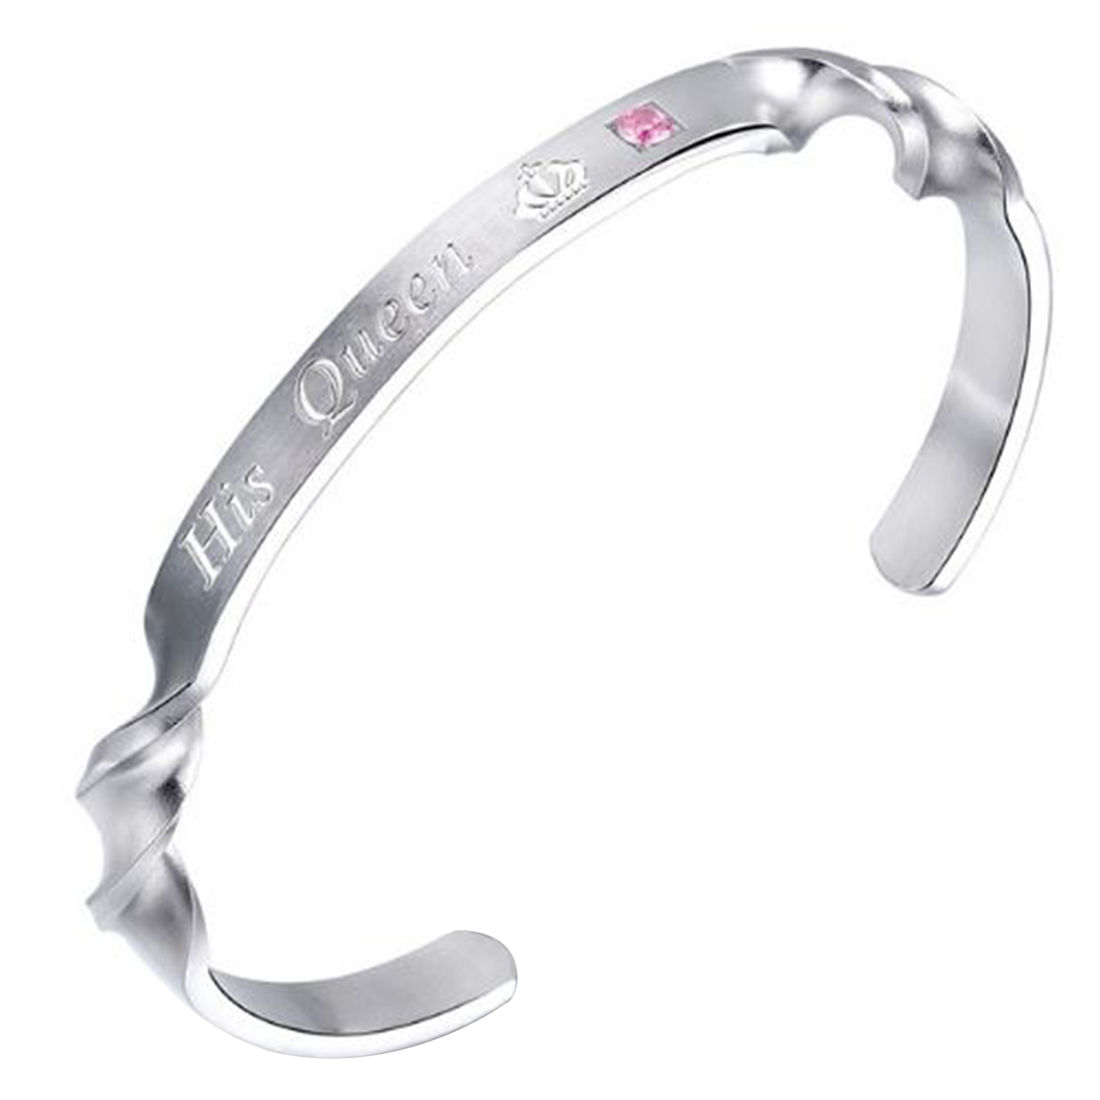 Buy Now OnlinePeora Mens 316L Stainless Steel Bracelet Design 3